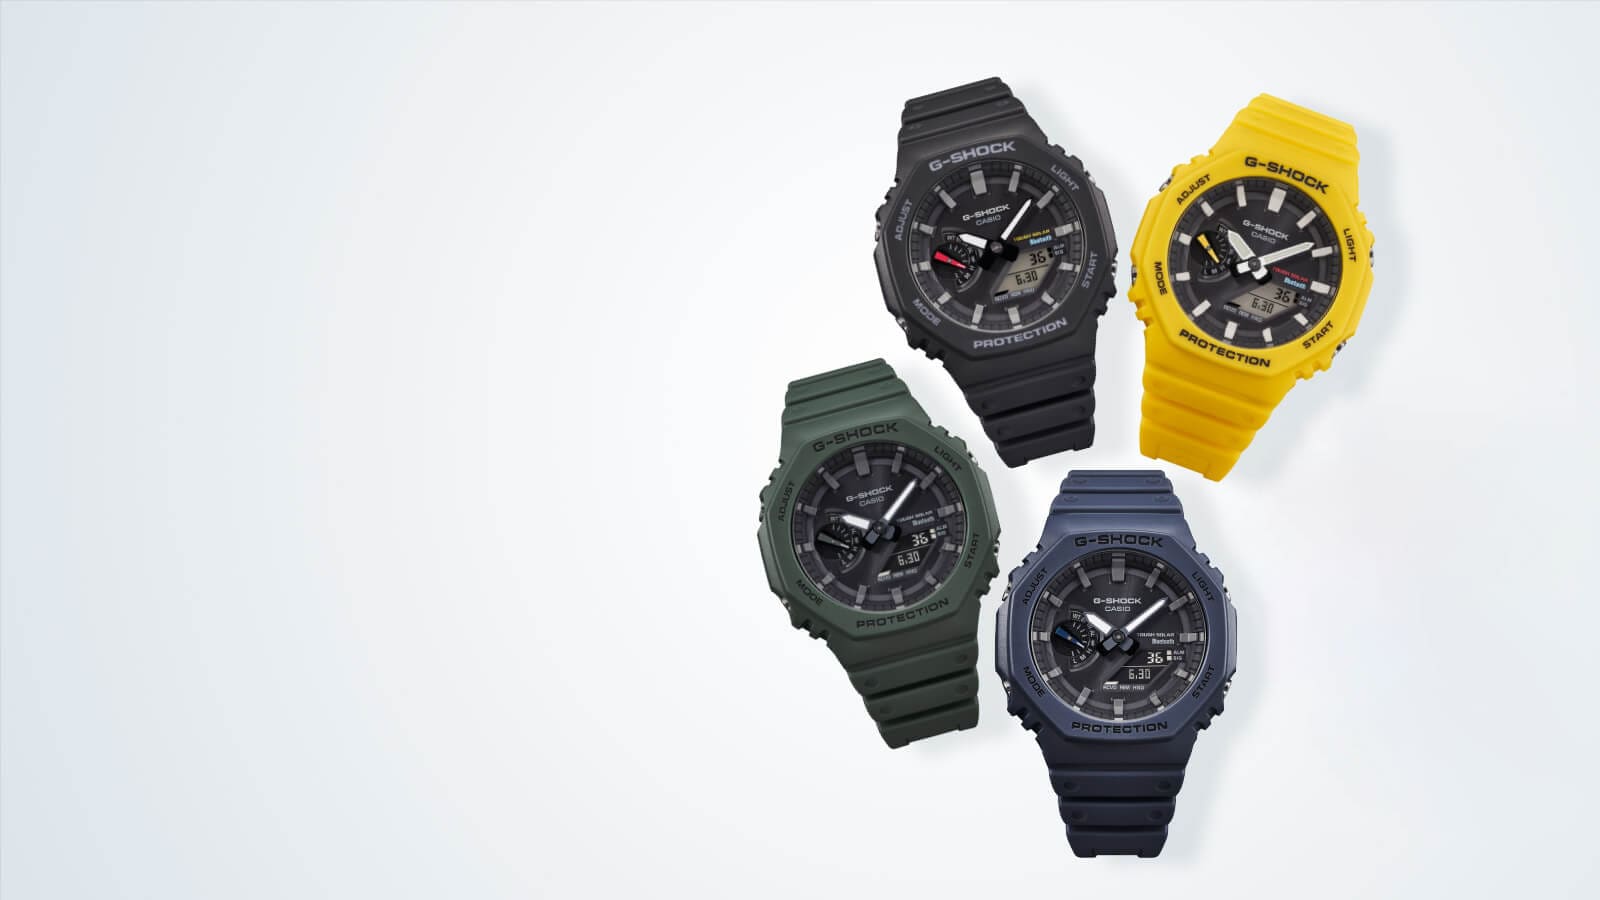 GA-B2100 set of 4 watches - green, glue, black, and yellow